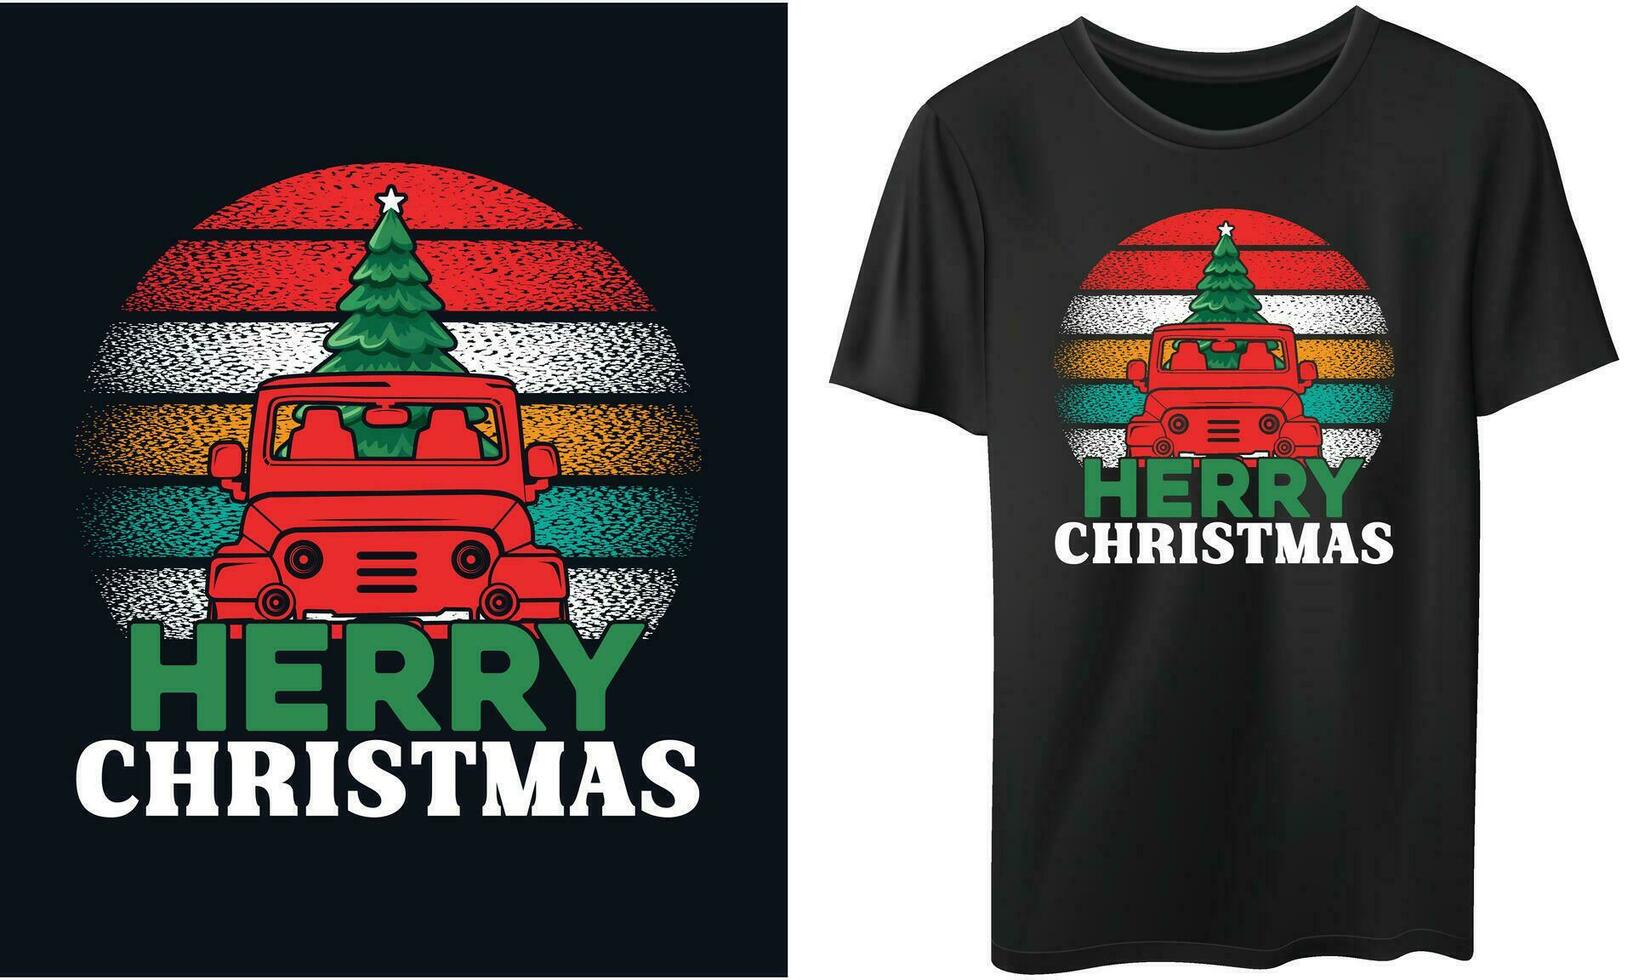 HERRY CHRISTMAS christmas t-shirt design vector